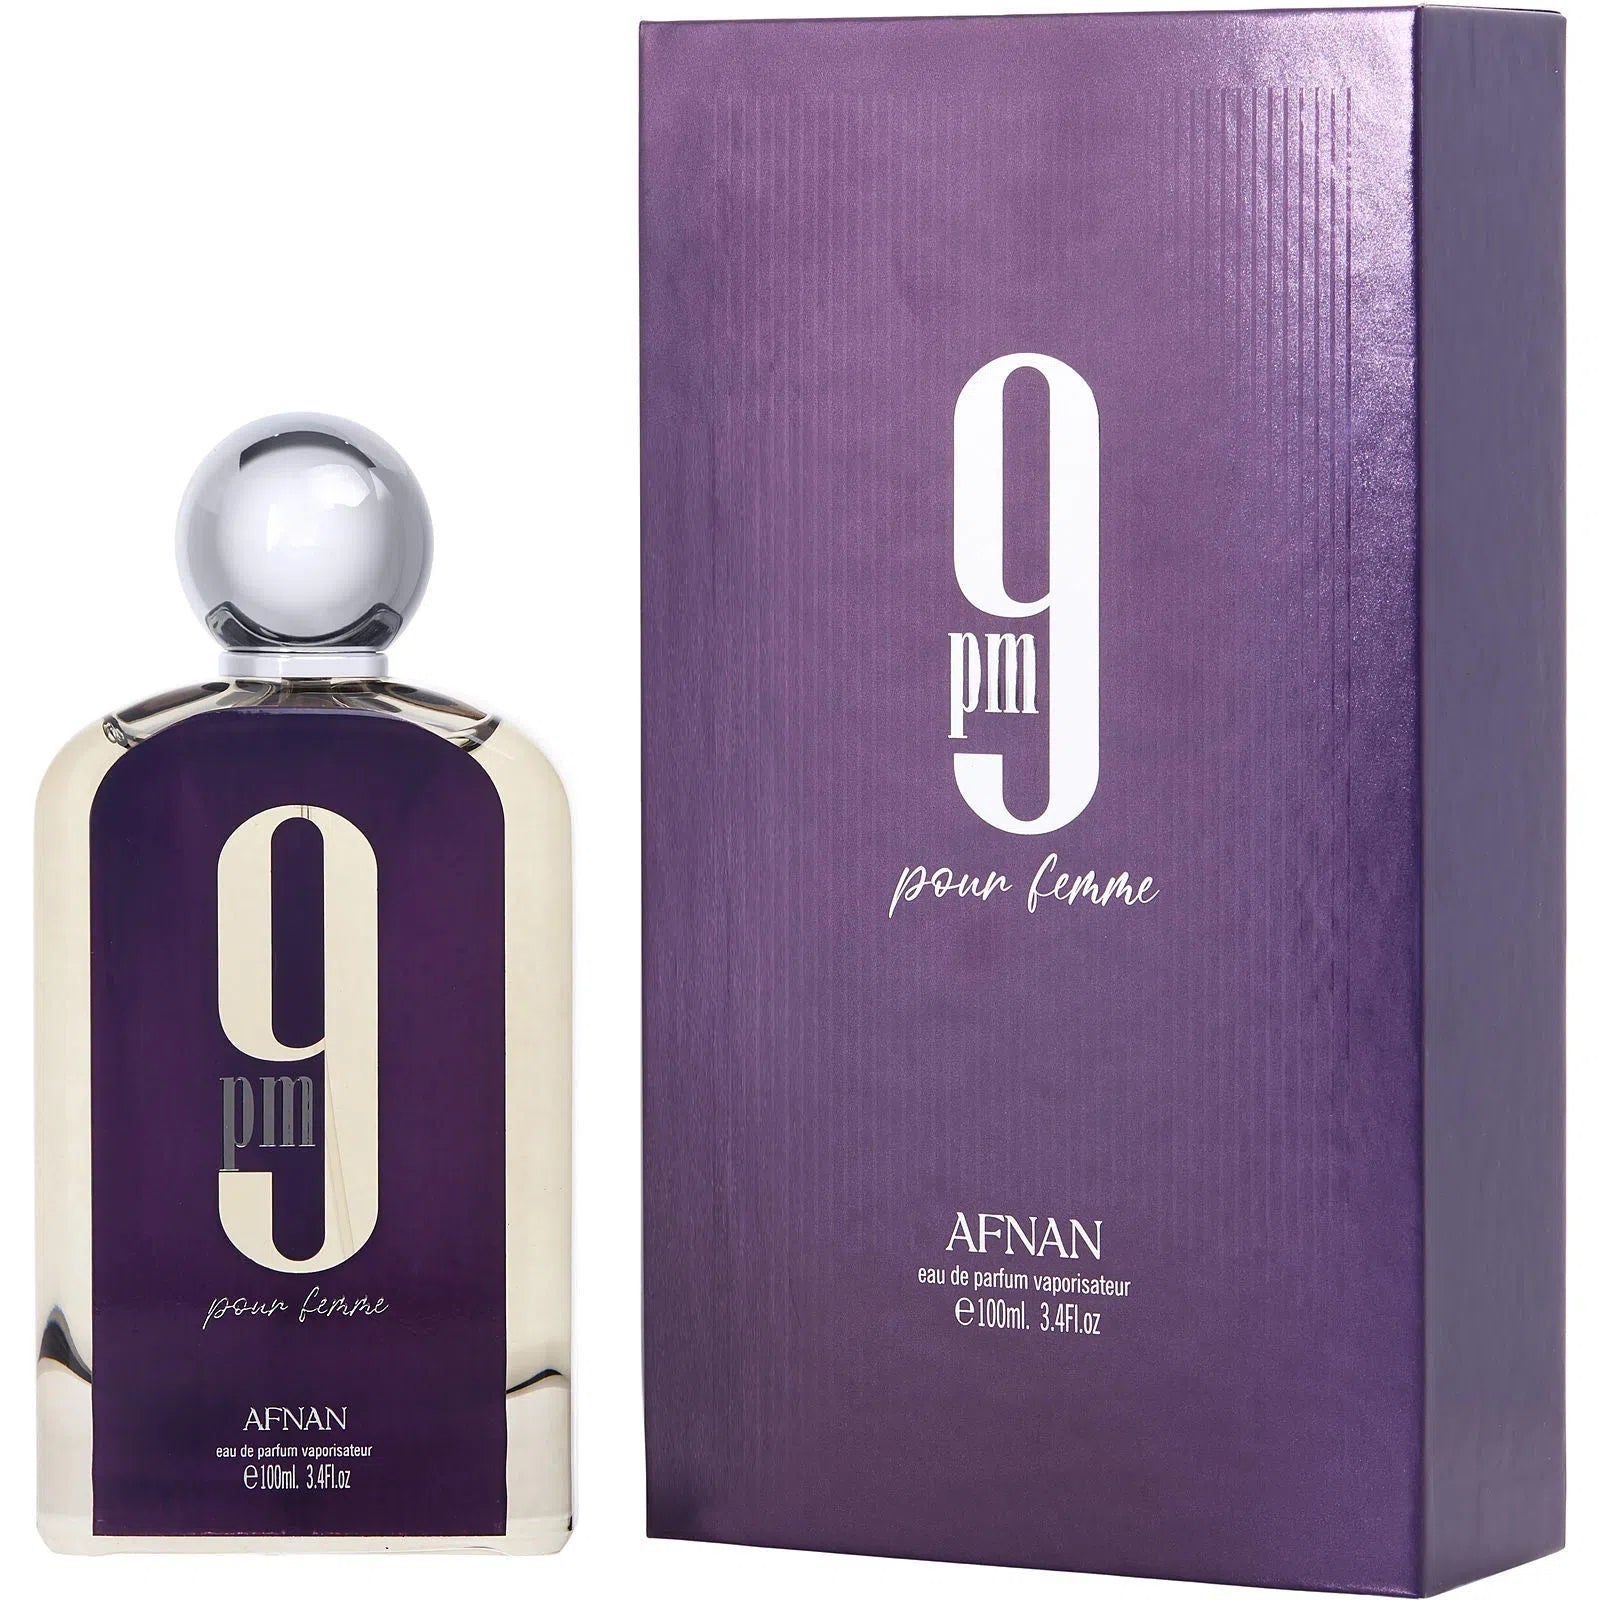 Perfume Afnan 9PM Femme EDP (W) / 100 ml - 6290171072607- Prive Perfumes Honduras